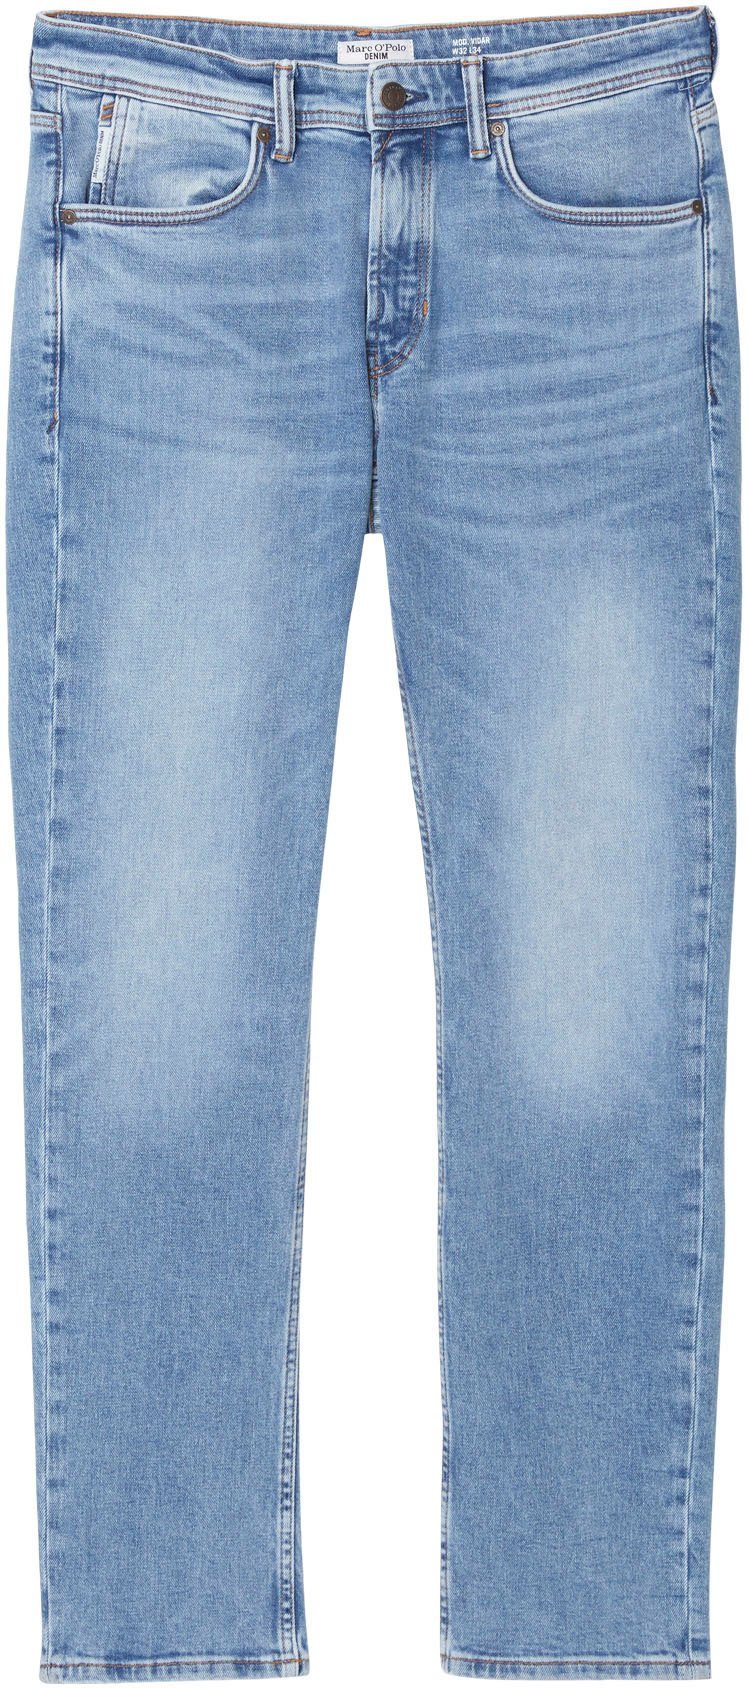 Marc O'Polo DENIM Stretch-Jeans vintage blue cobalt light